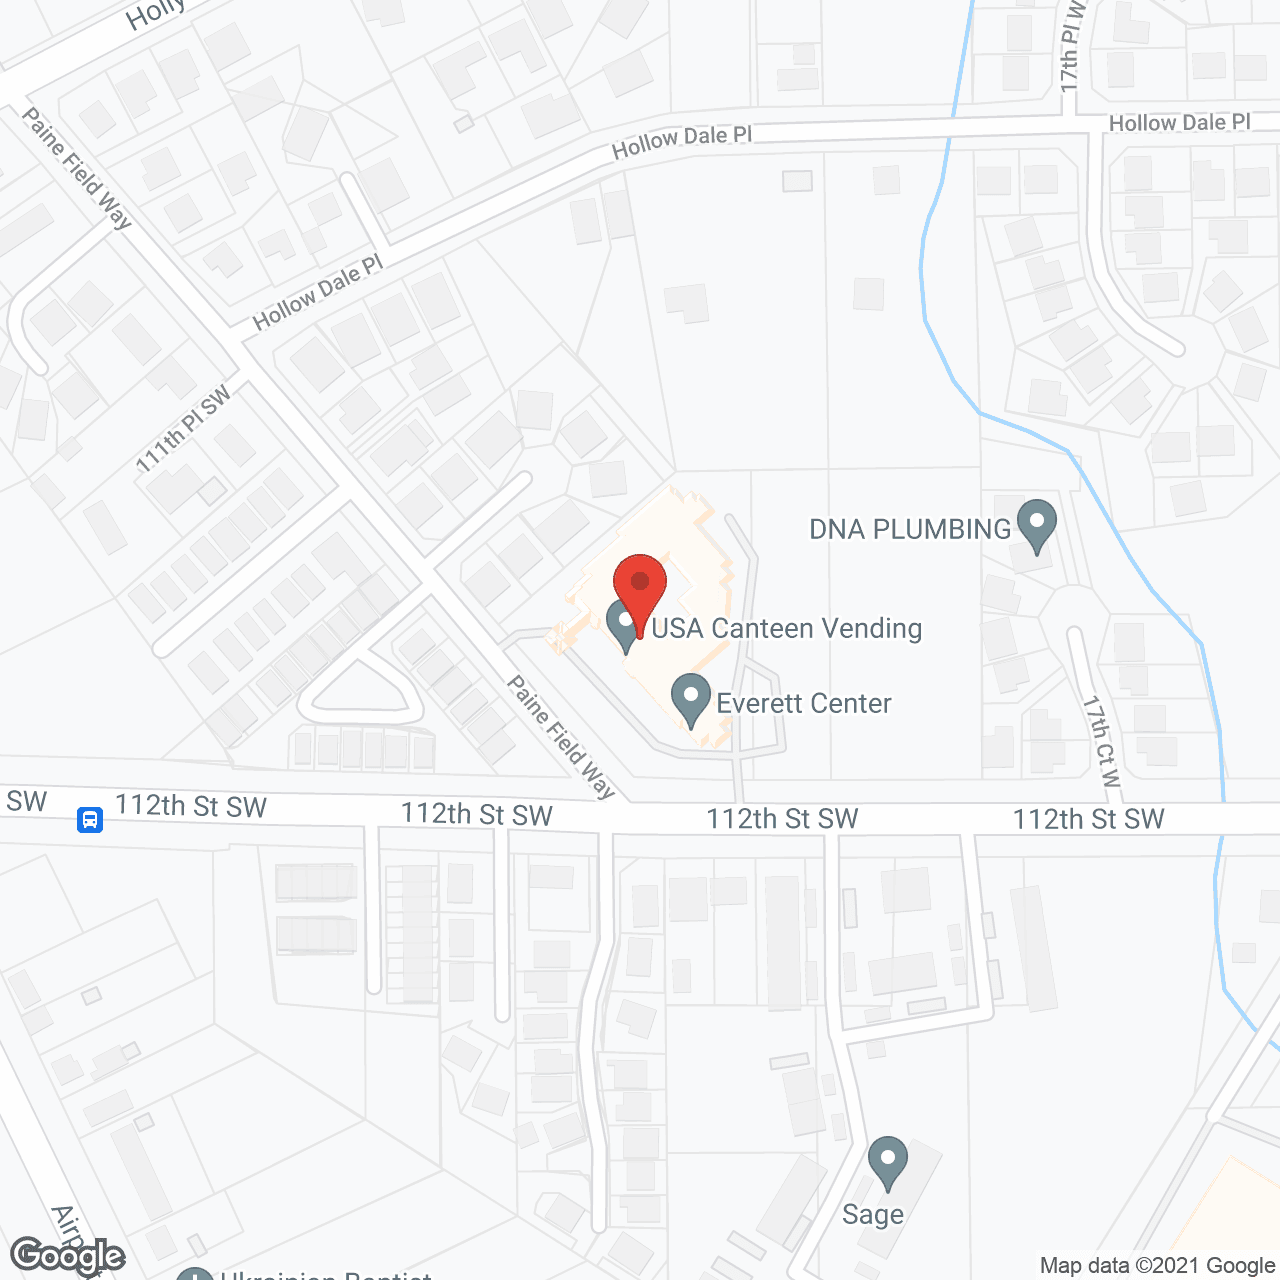 Genesis - Everett Center in google map